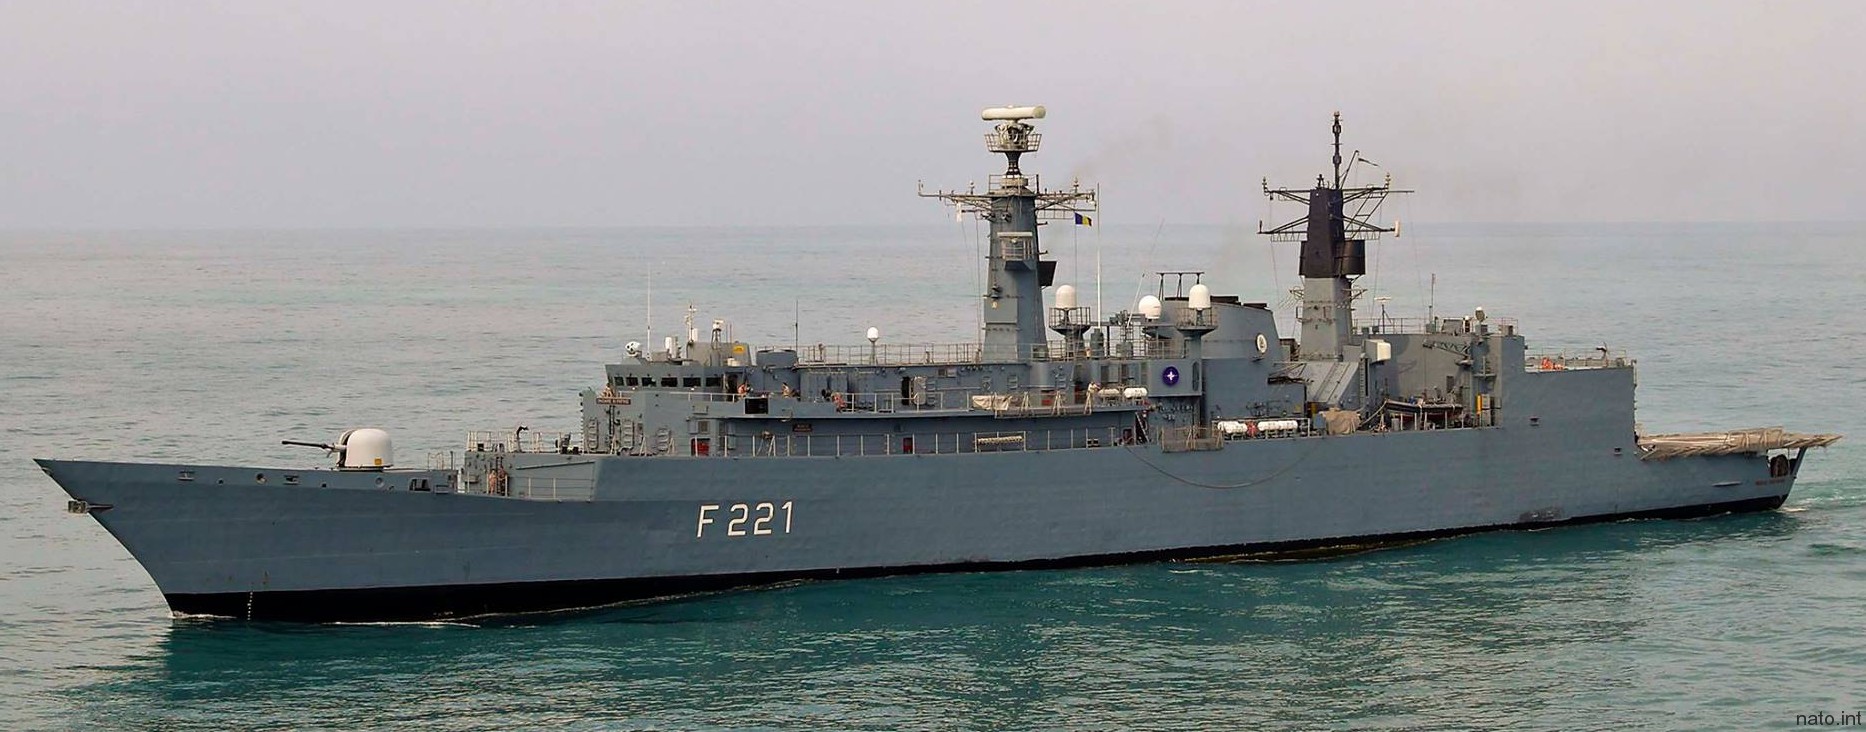 f-221 ros regele ferdinand frigate romanian navy type 22 broadsword class 03